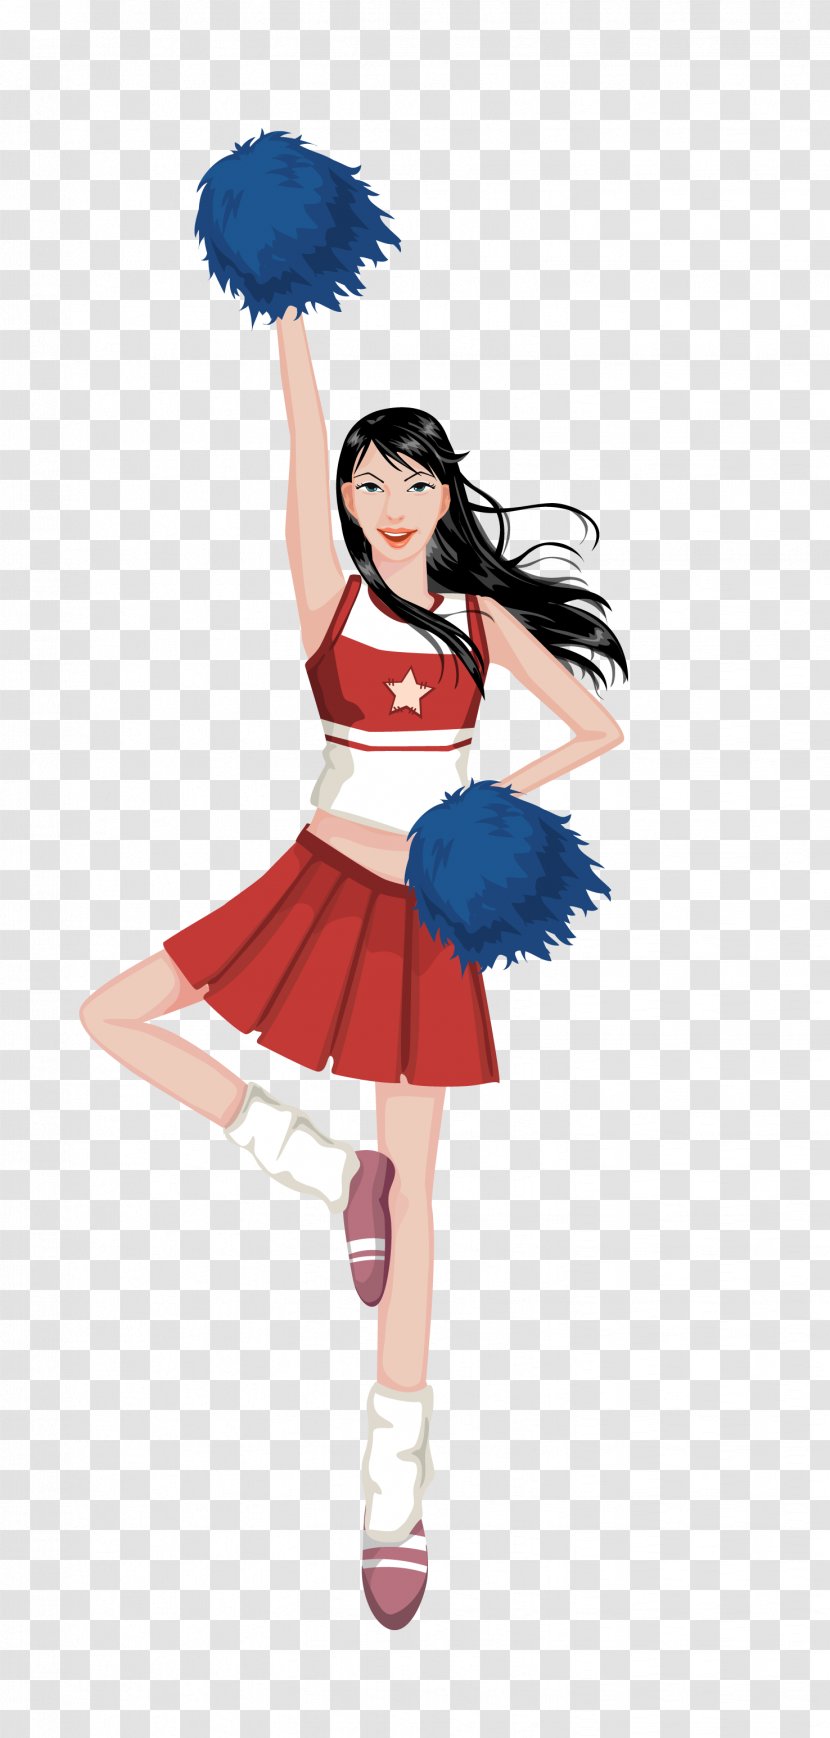 Cartoon Cheerleader Illustration - Tree - Cheerleaders Transparent PNG